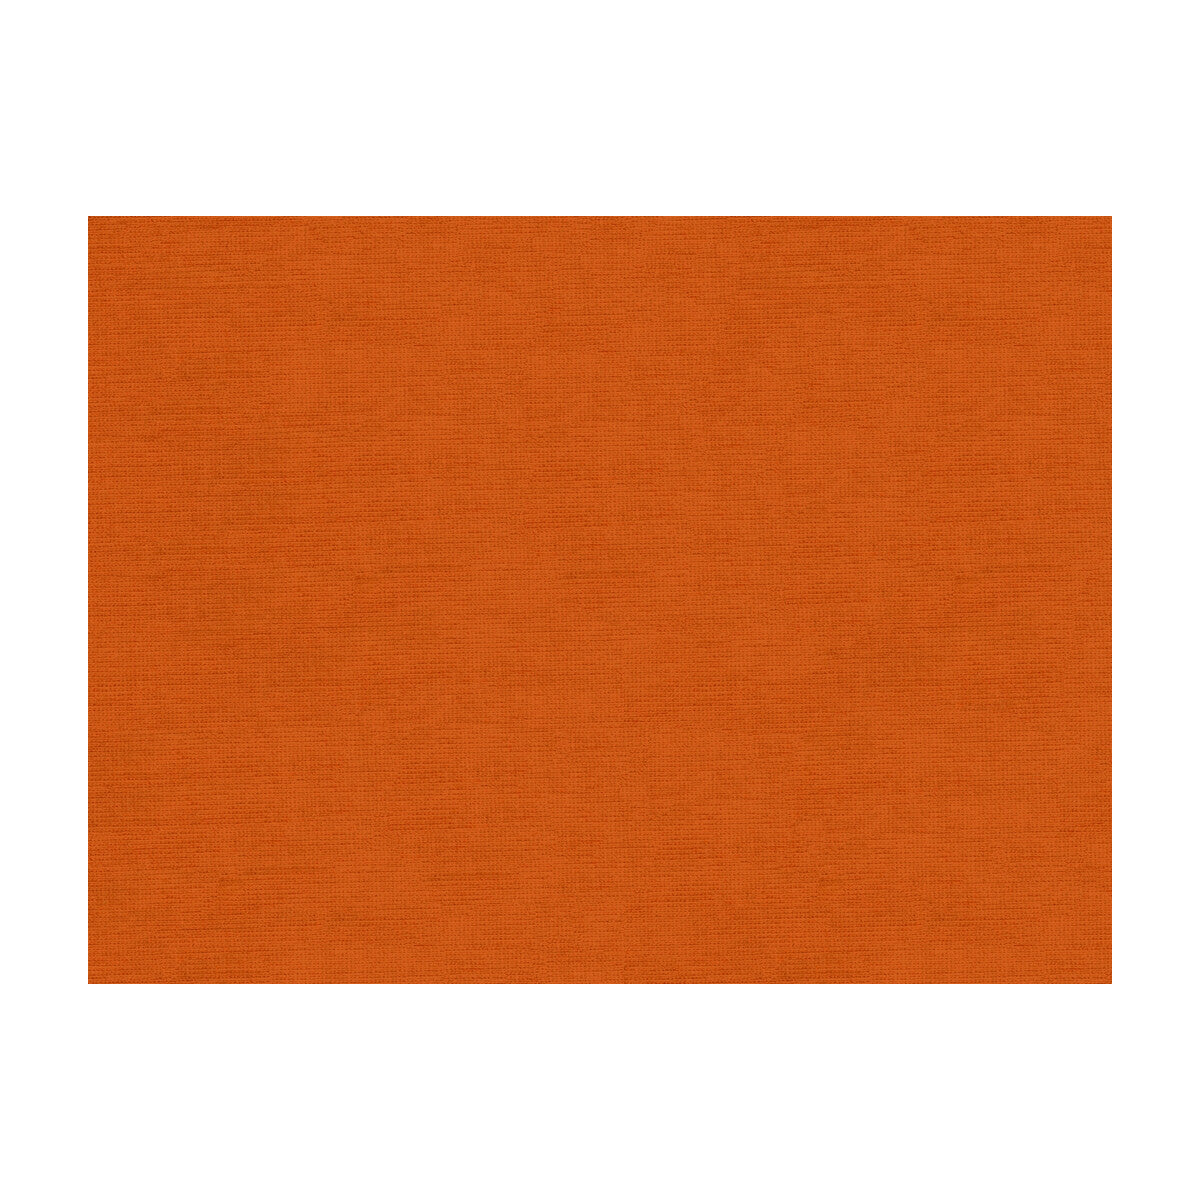 Charmant Velvet fabric in cognac color - pattern 8013150.1212.0 - by Brunschwig &amp; Fils